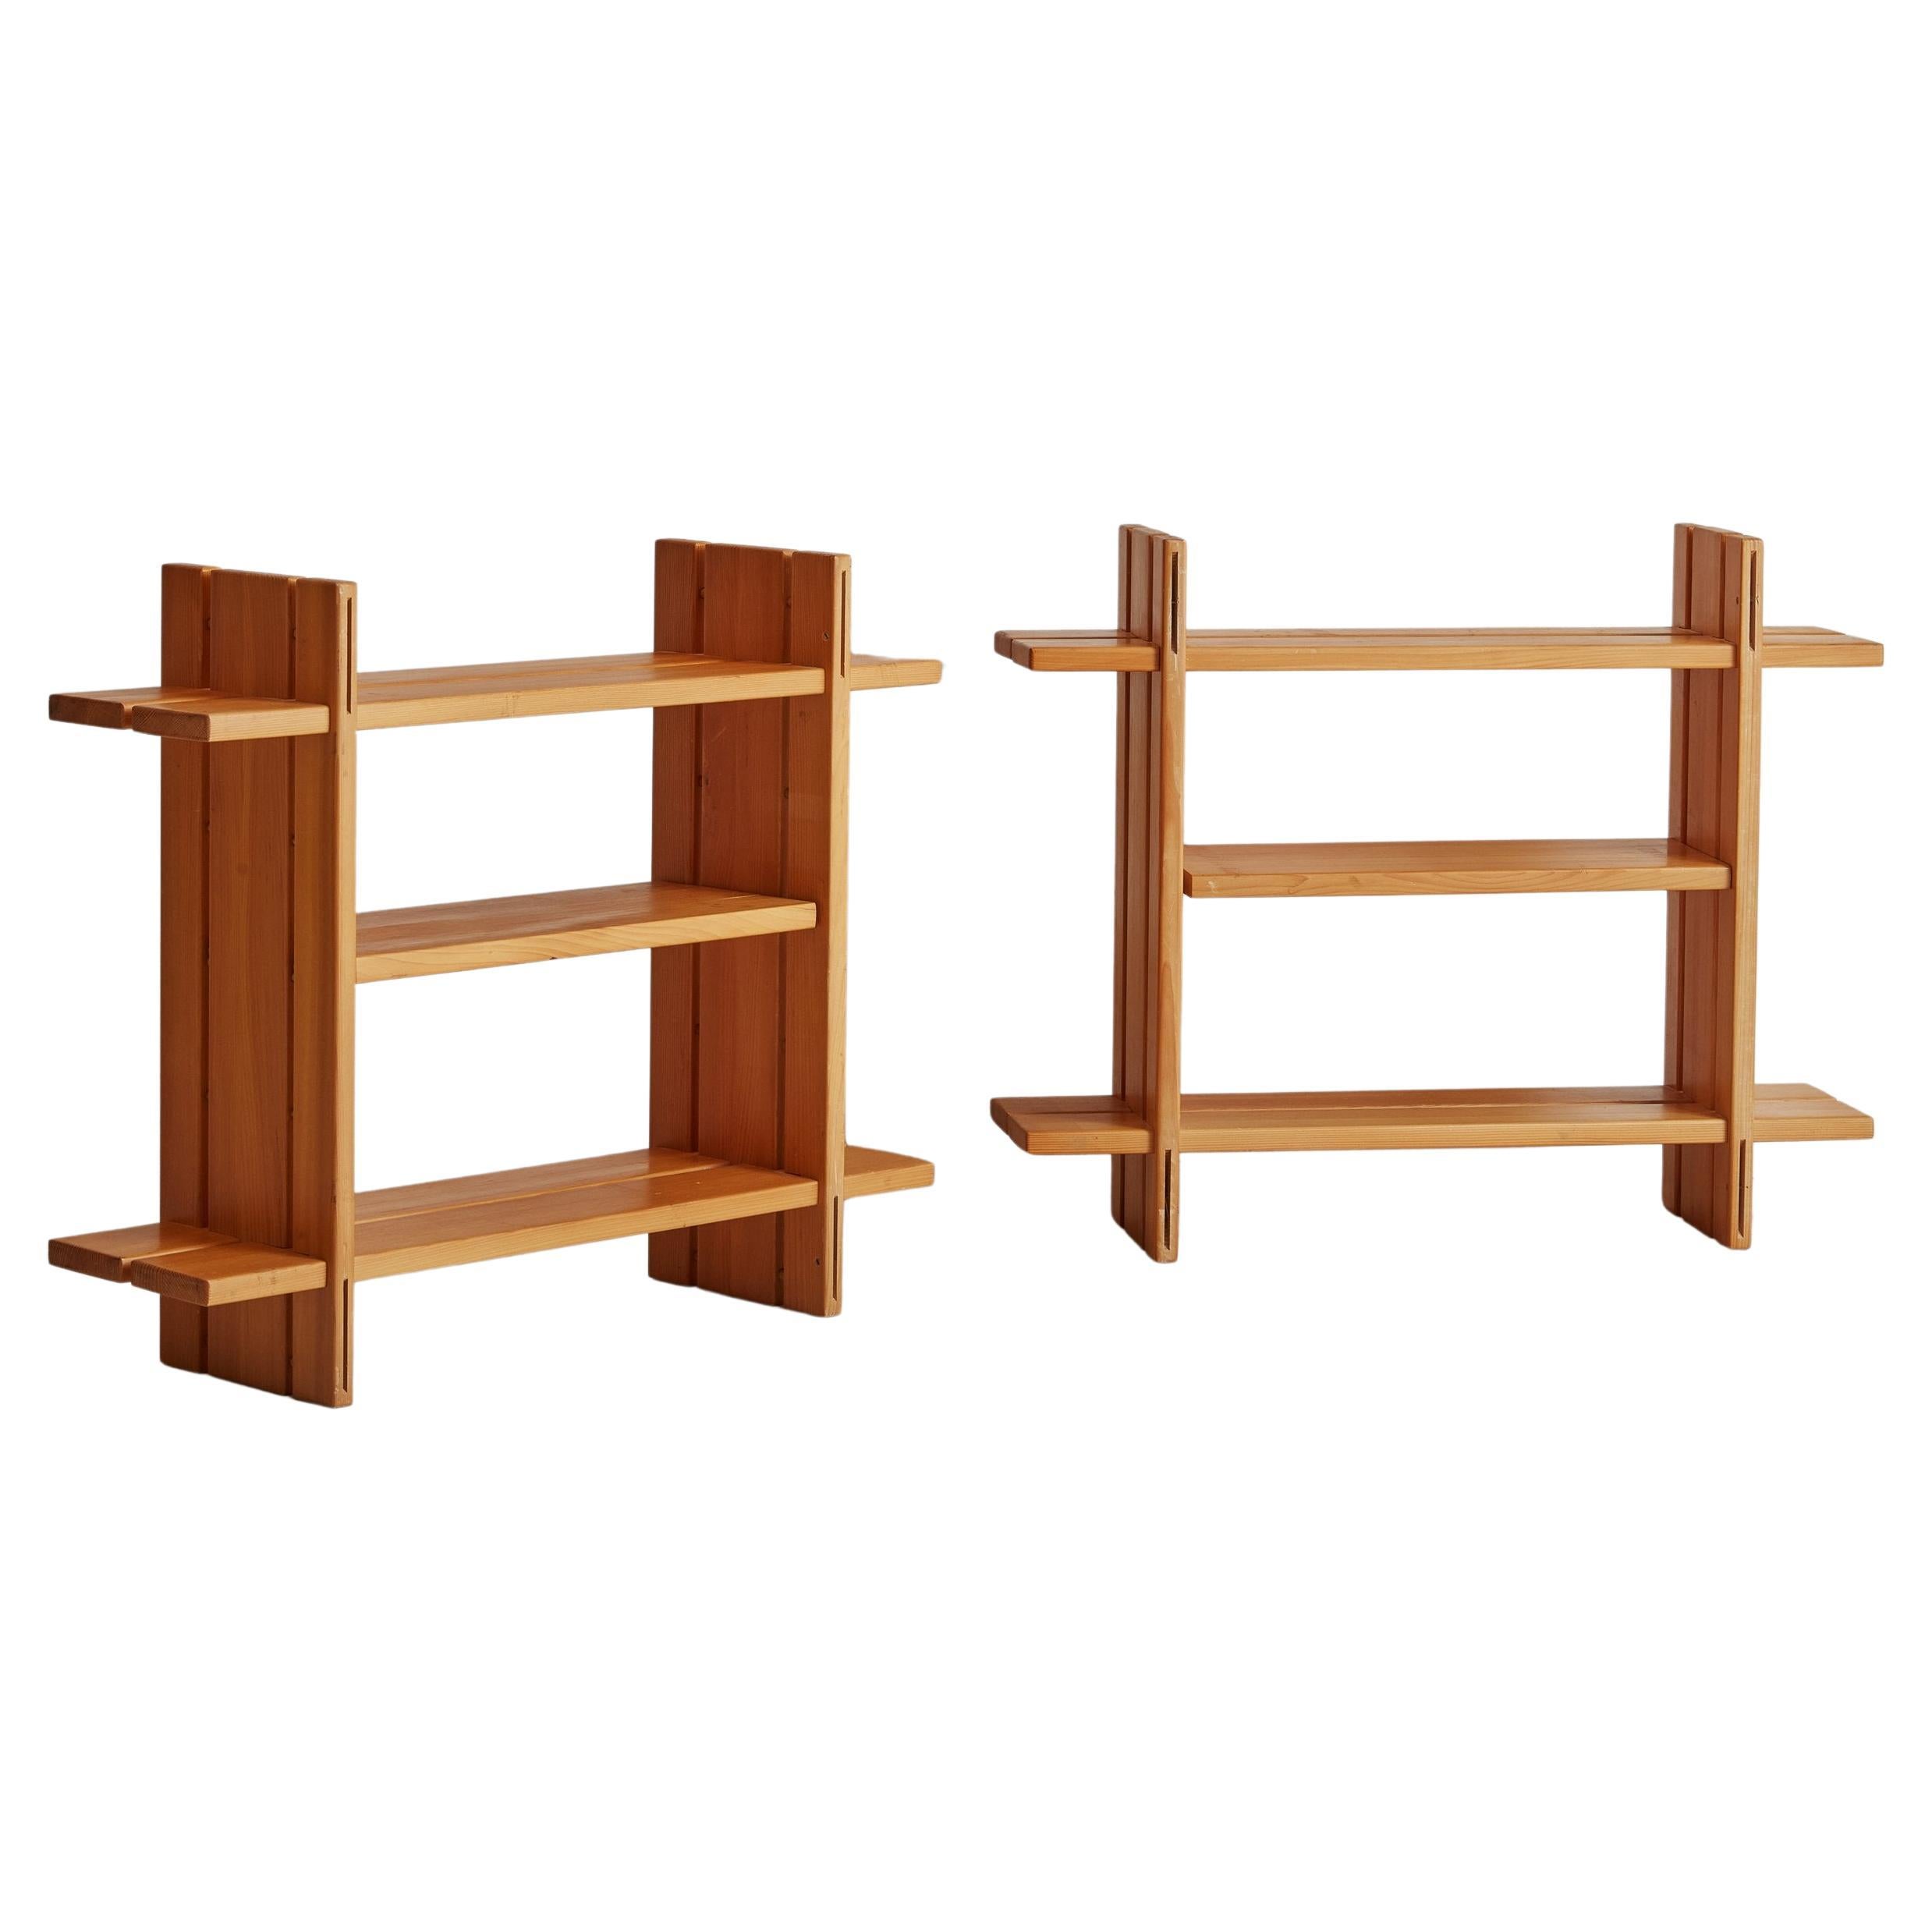 Pair of Pine Wood Shelves by Maison Regain, France 1980s